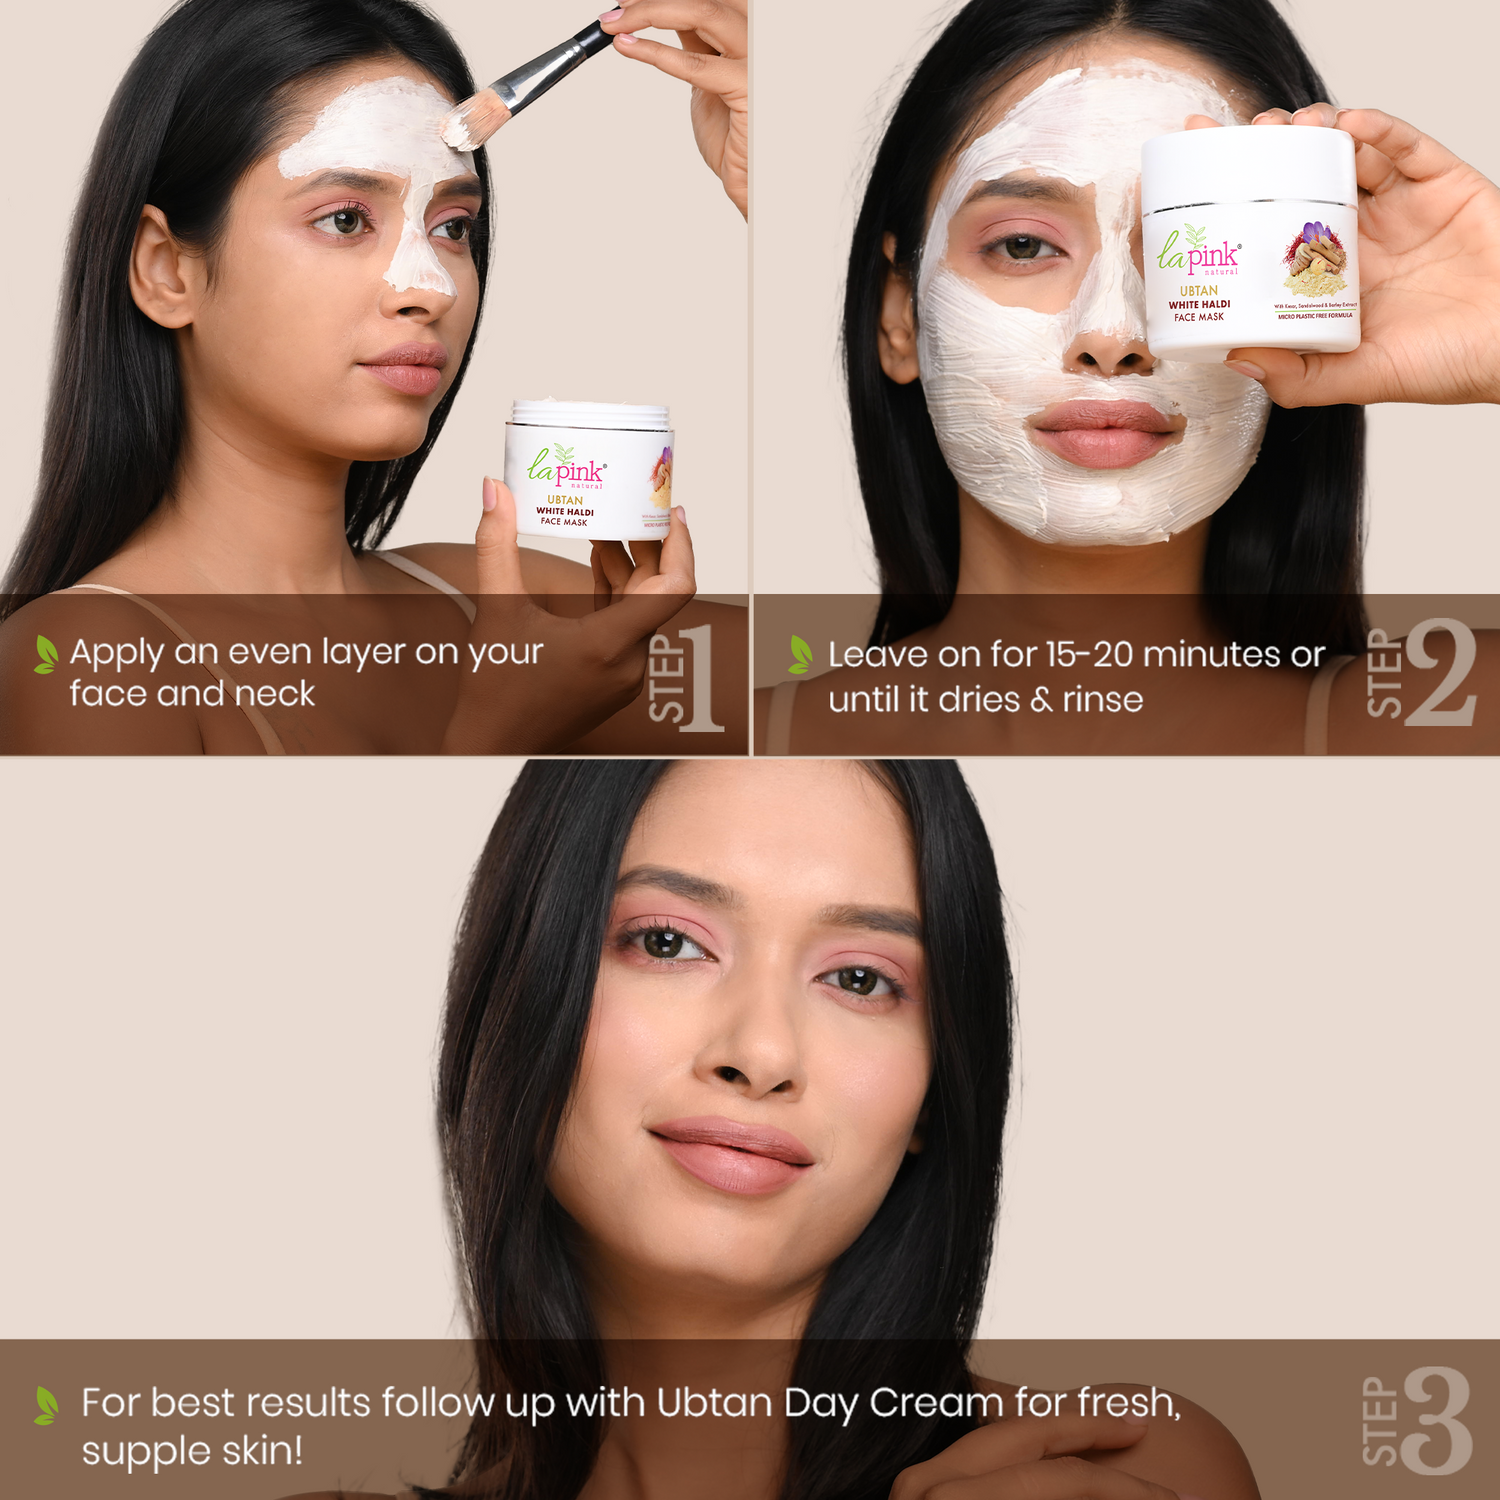 Ubtan White Haldi Face Mask With Saffron for Tan Removal